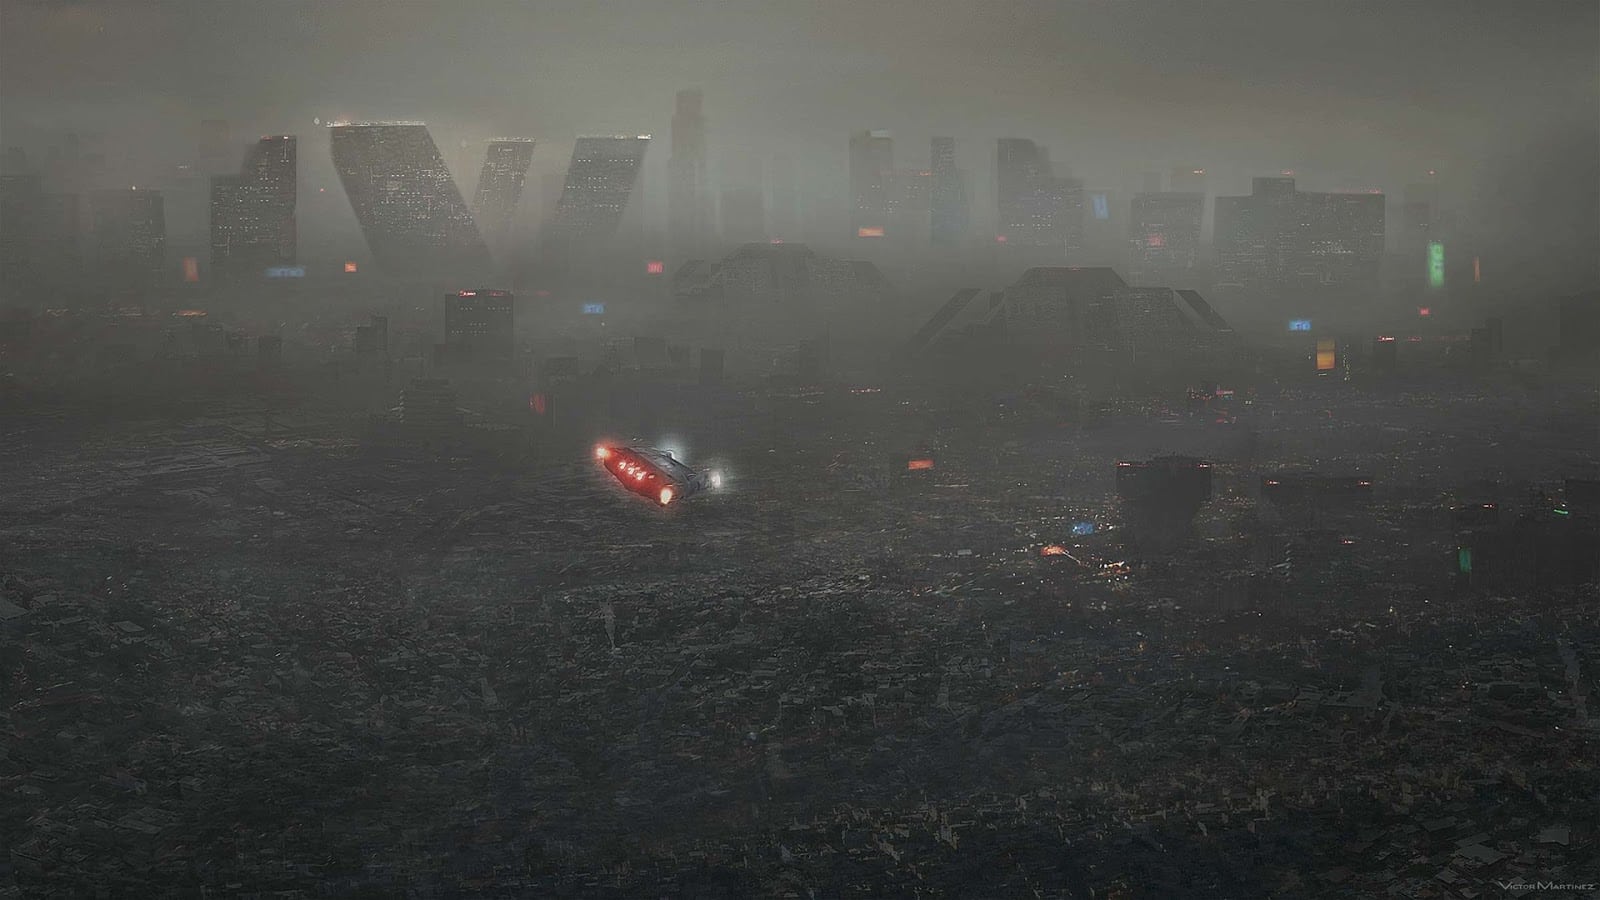 Victor Martinez-Blade Runner 2049-concept art-ilustración